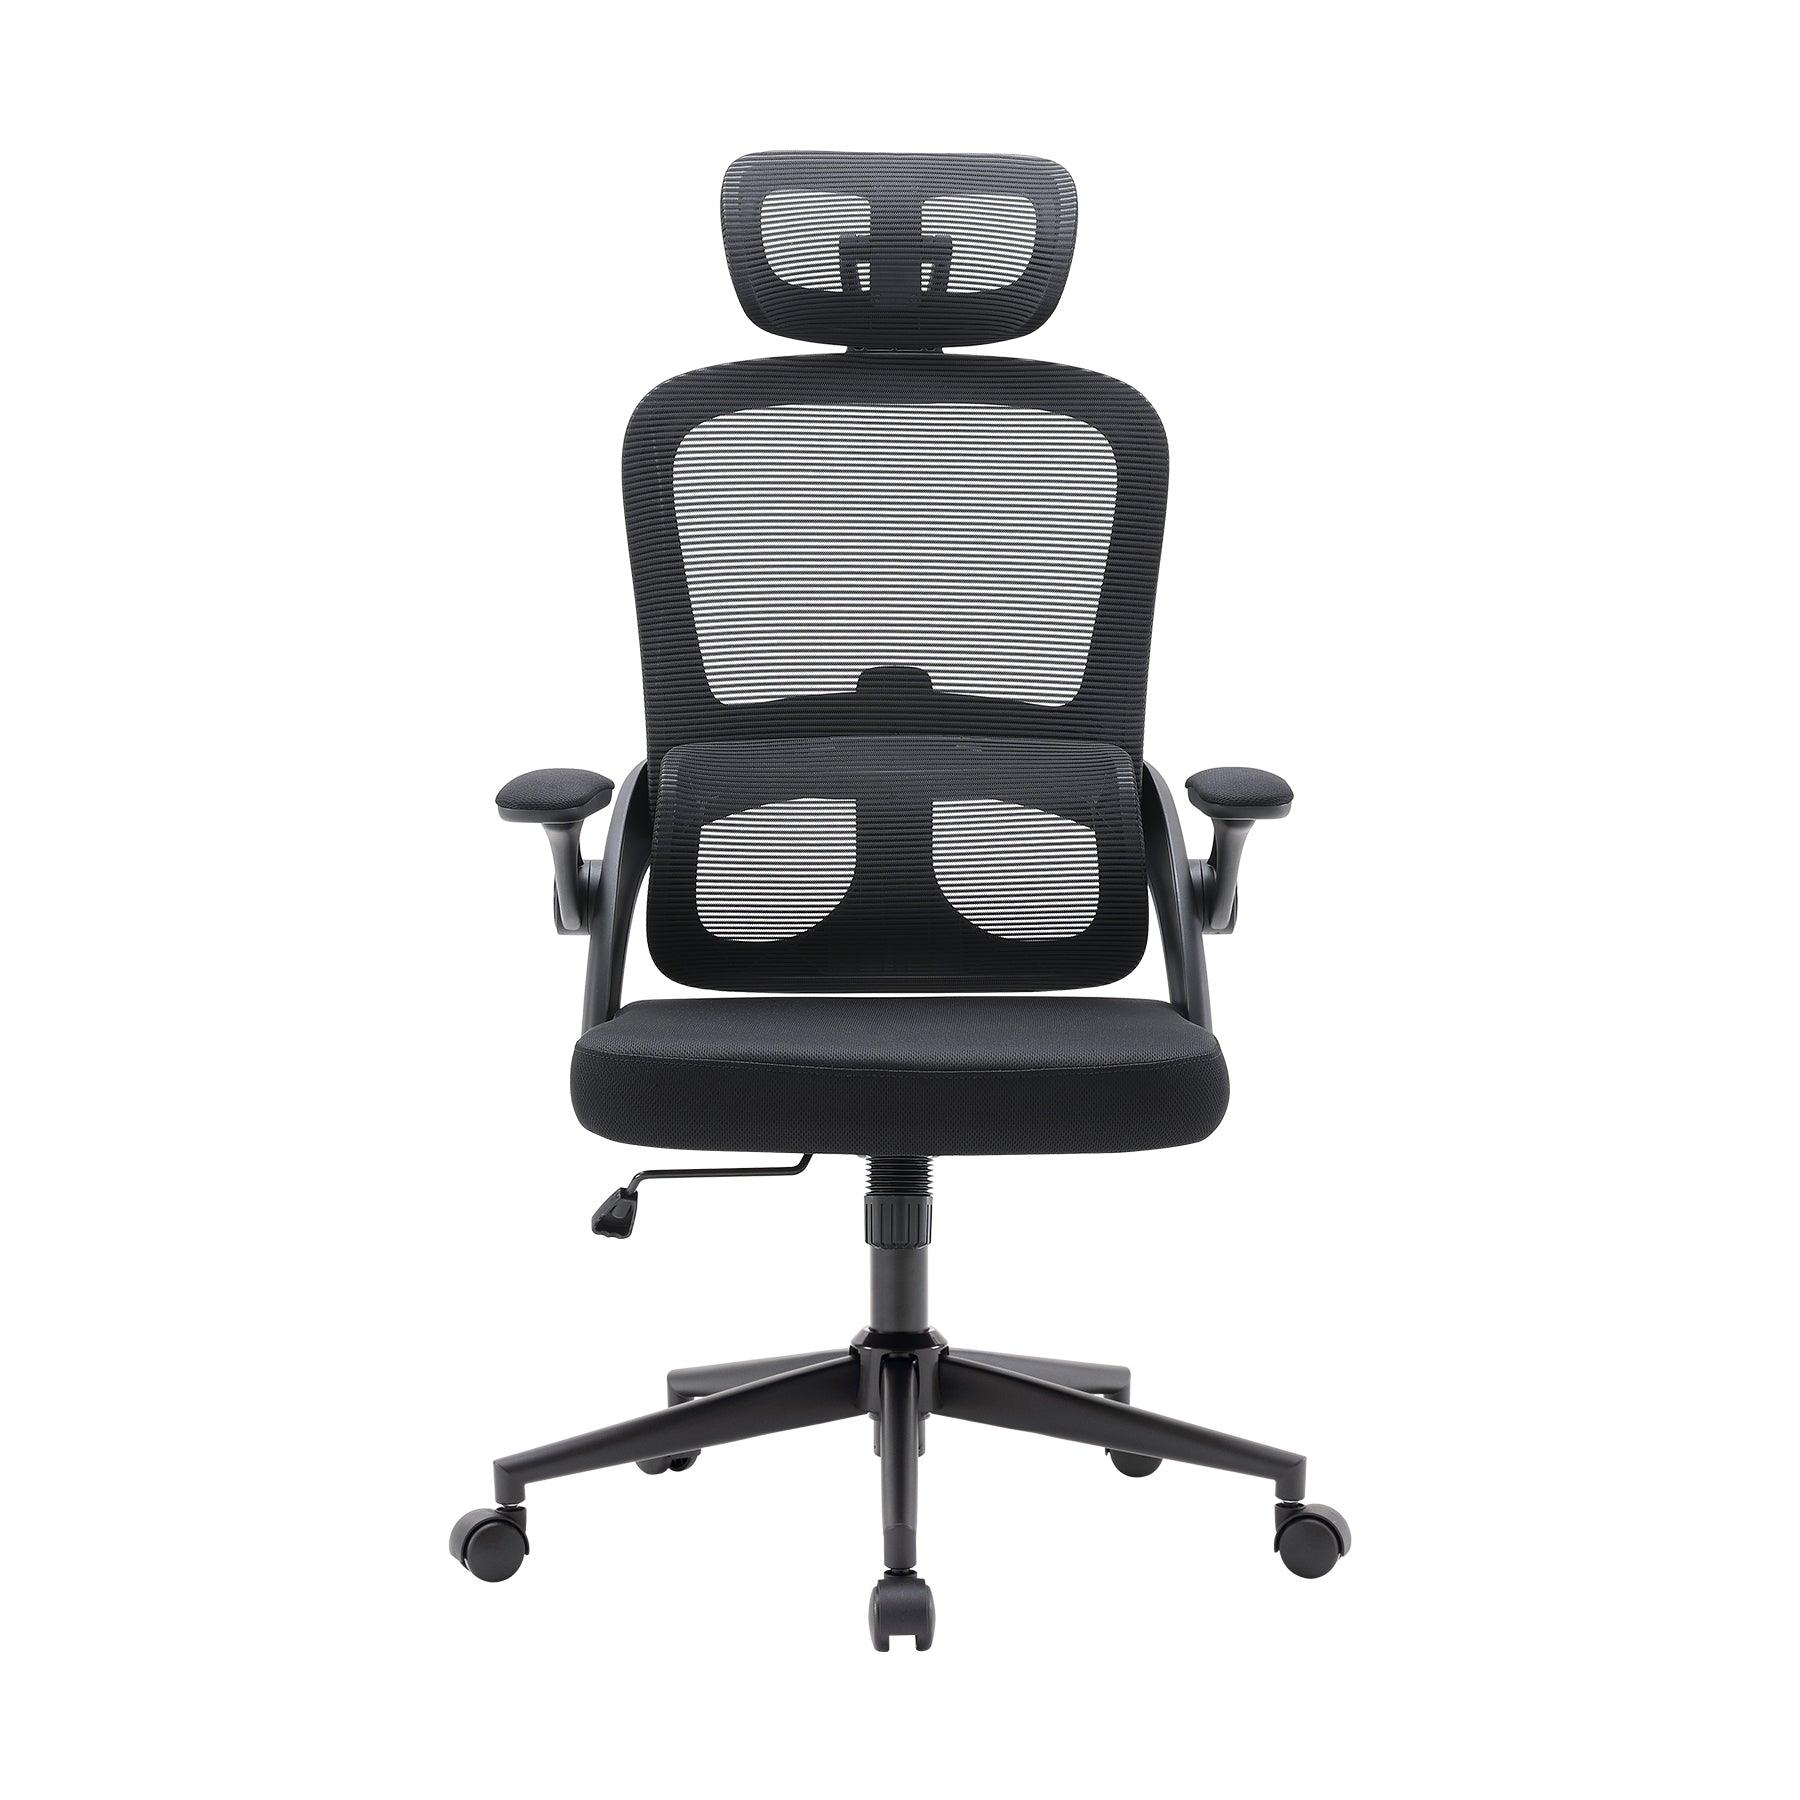 Apply ₹2000 Coupon] SIHOO® M18 High Back Office Chair, Mesh